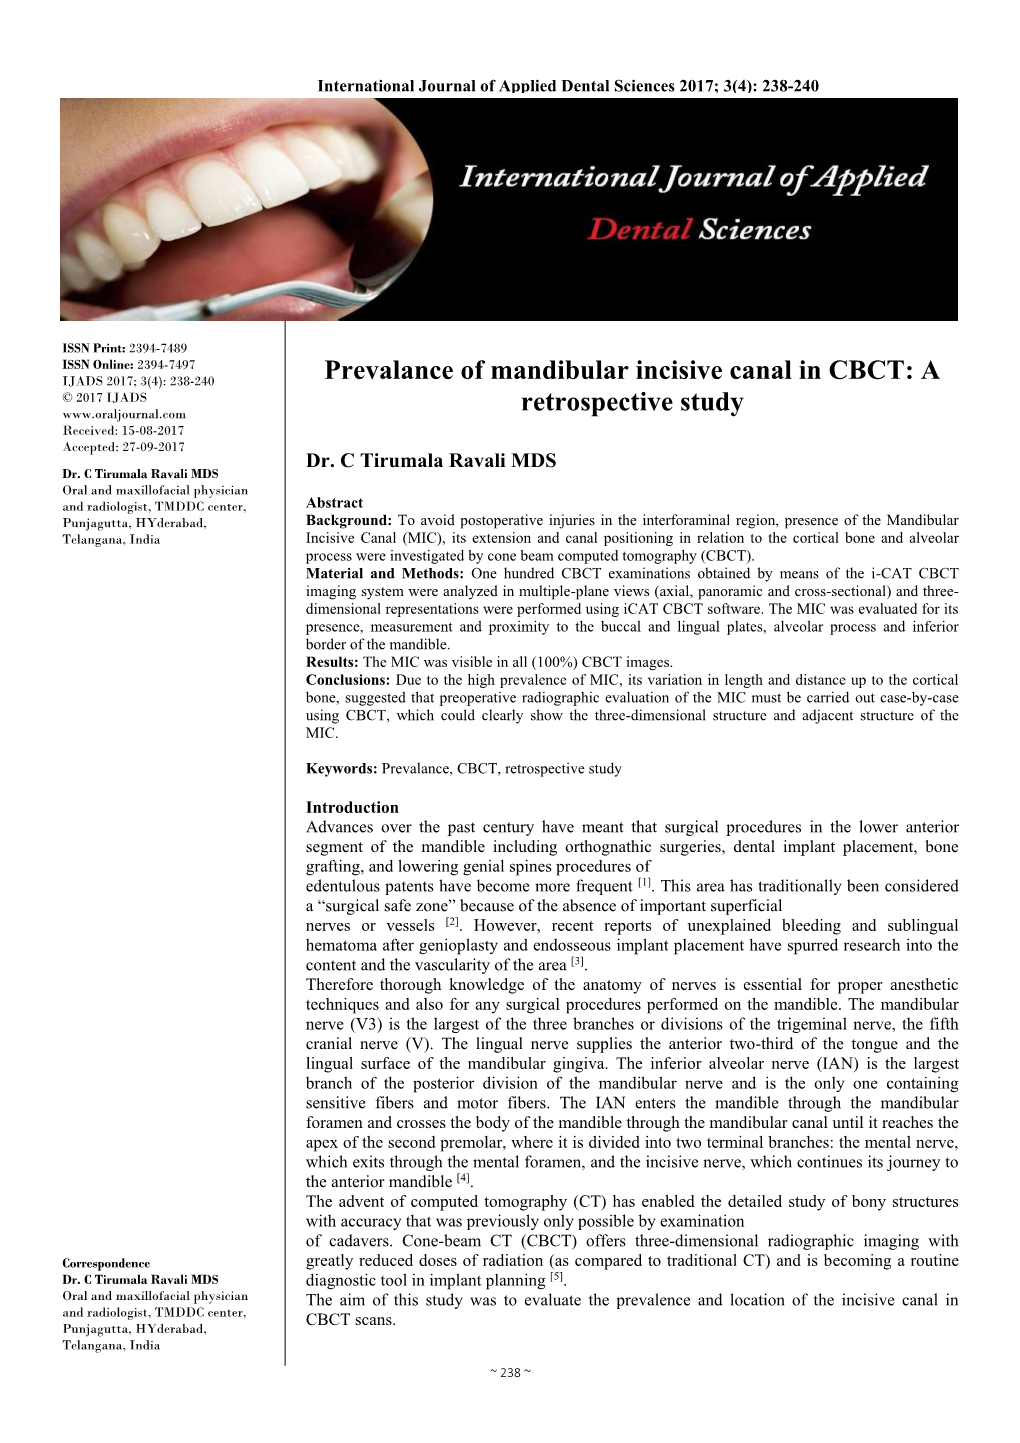 Prevalance of Mandibular Incisive Canal in CBCT: a Retrospective Study